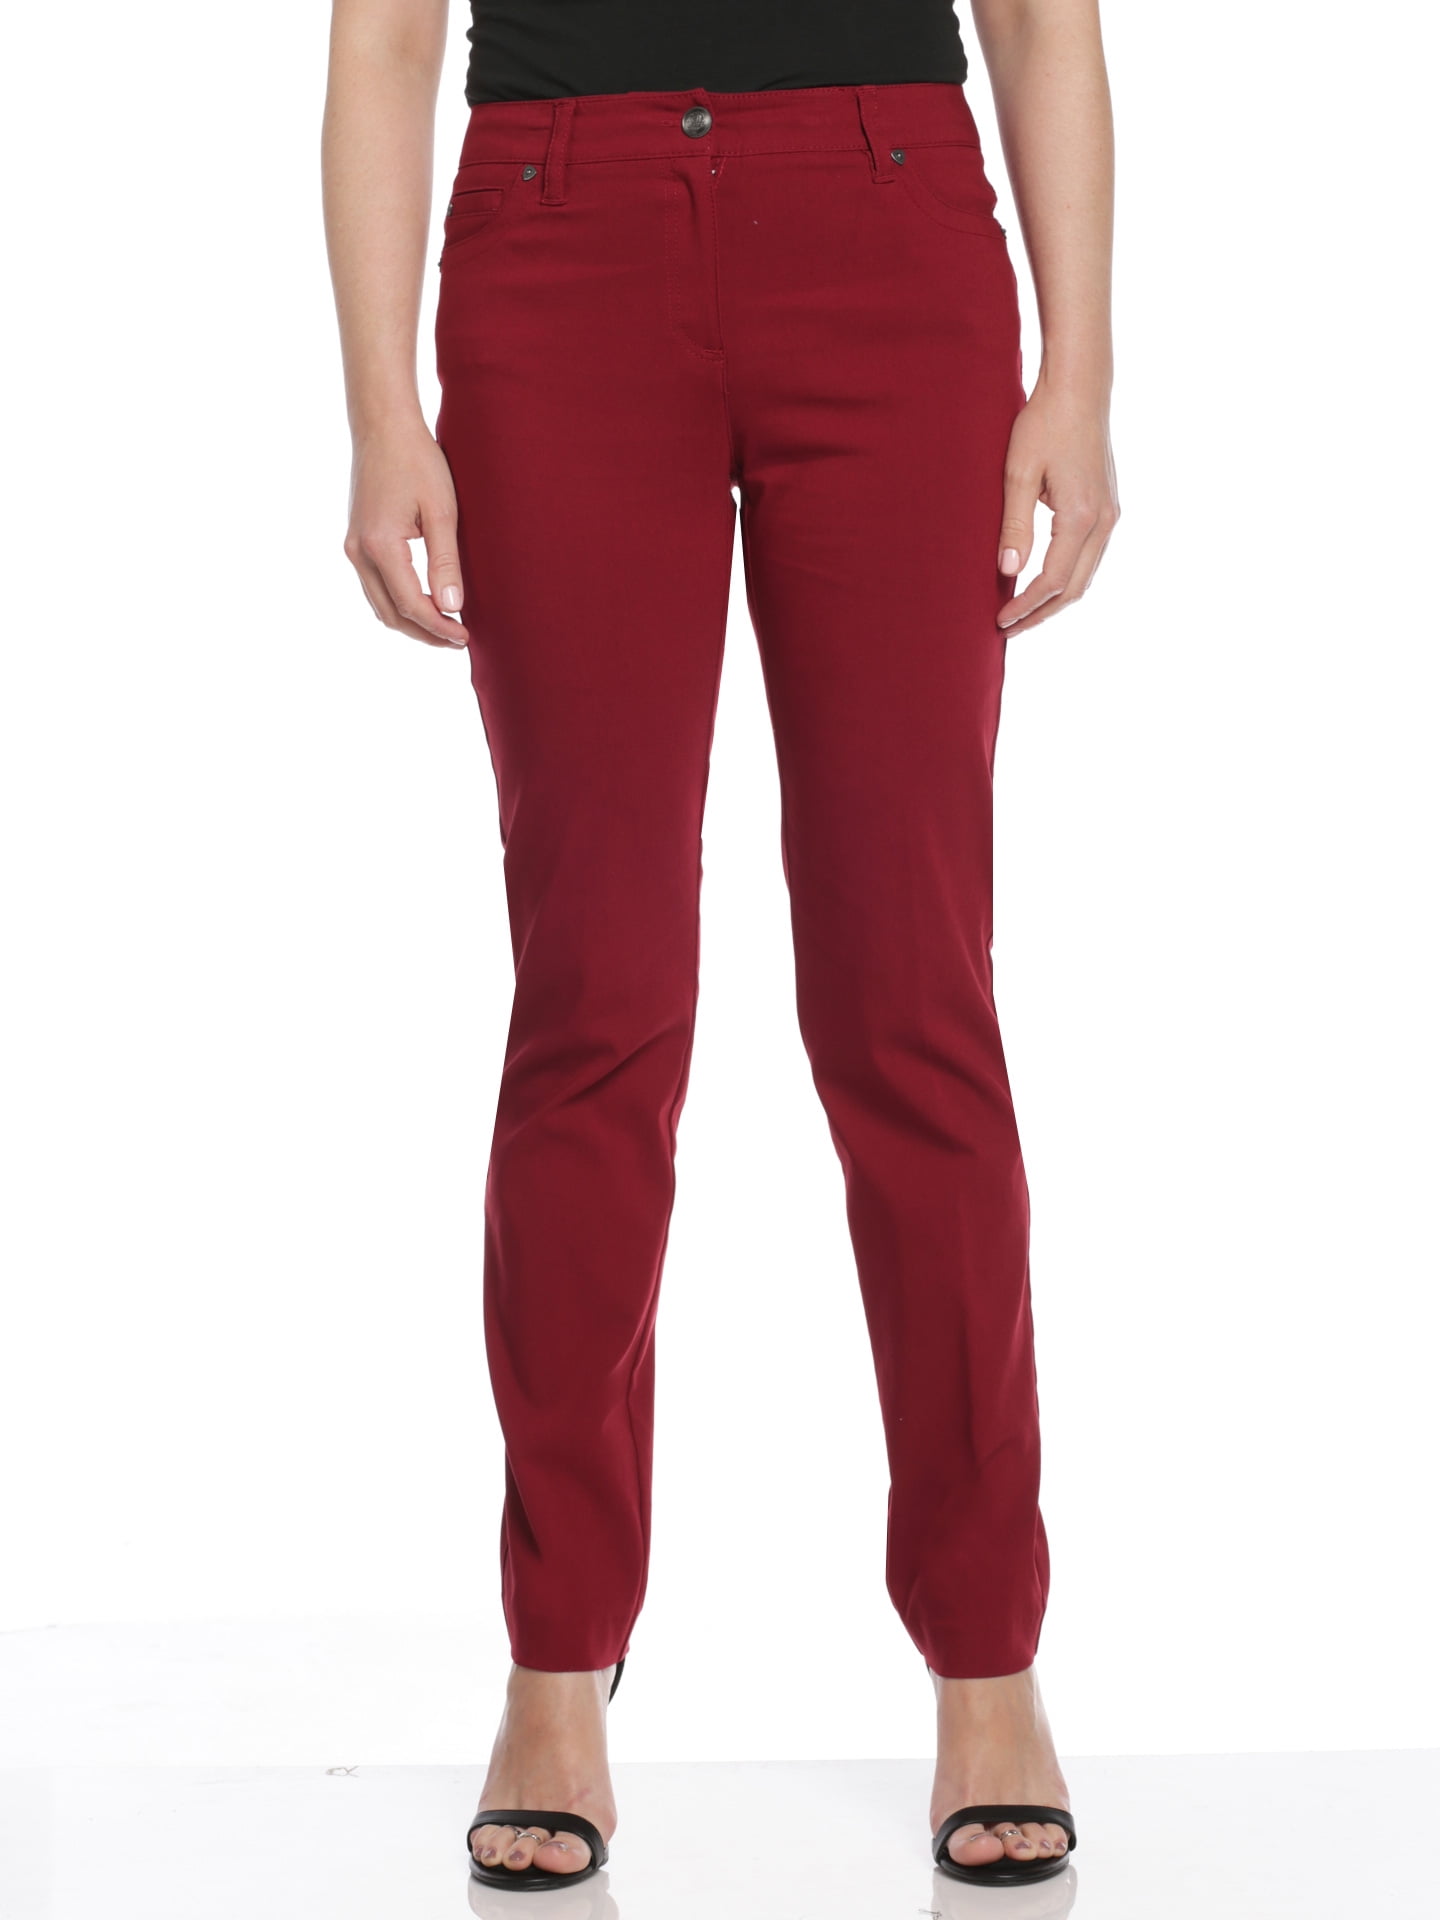 Zac & Rachel Women's Millenium Full Length Pants, Garnet, 6 - Walmart.com